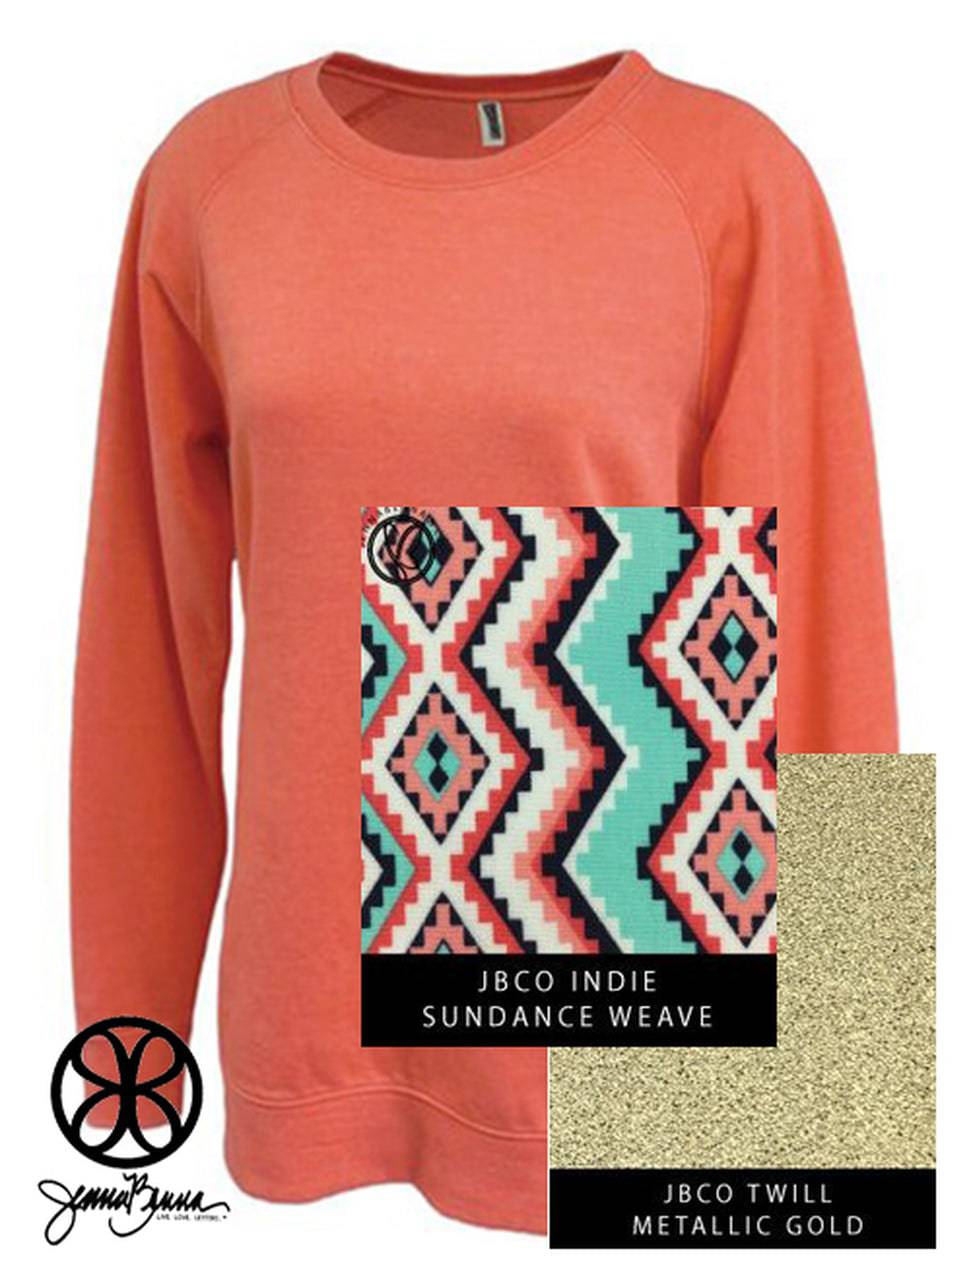 Sorority Apparel - Sunset Stacy Sandwashed Ladies Crewneck Sweatshirt + Sundance Weave Indie